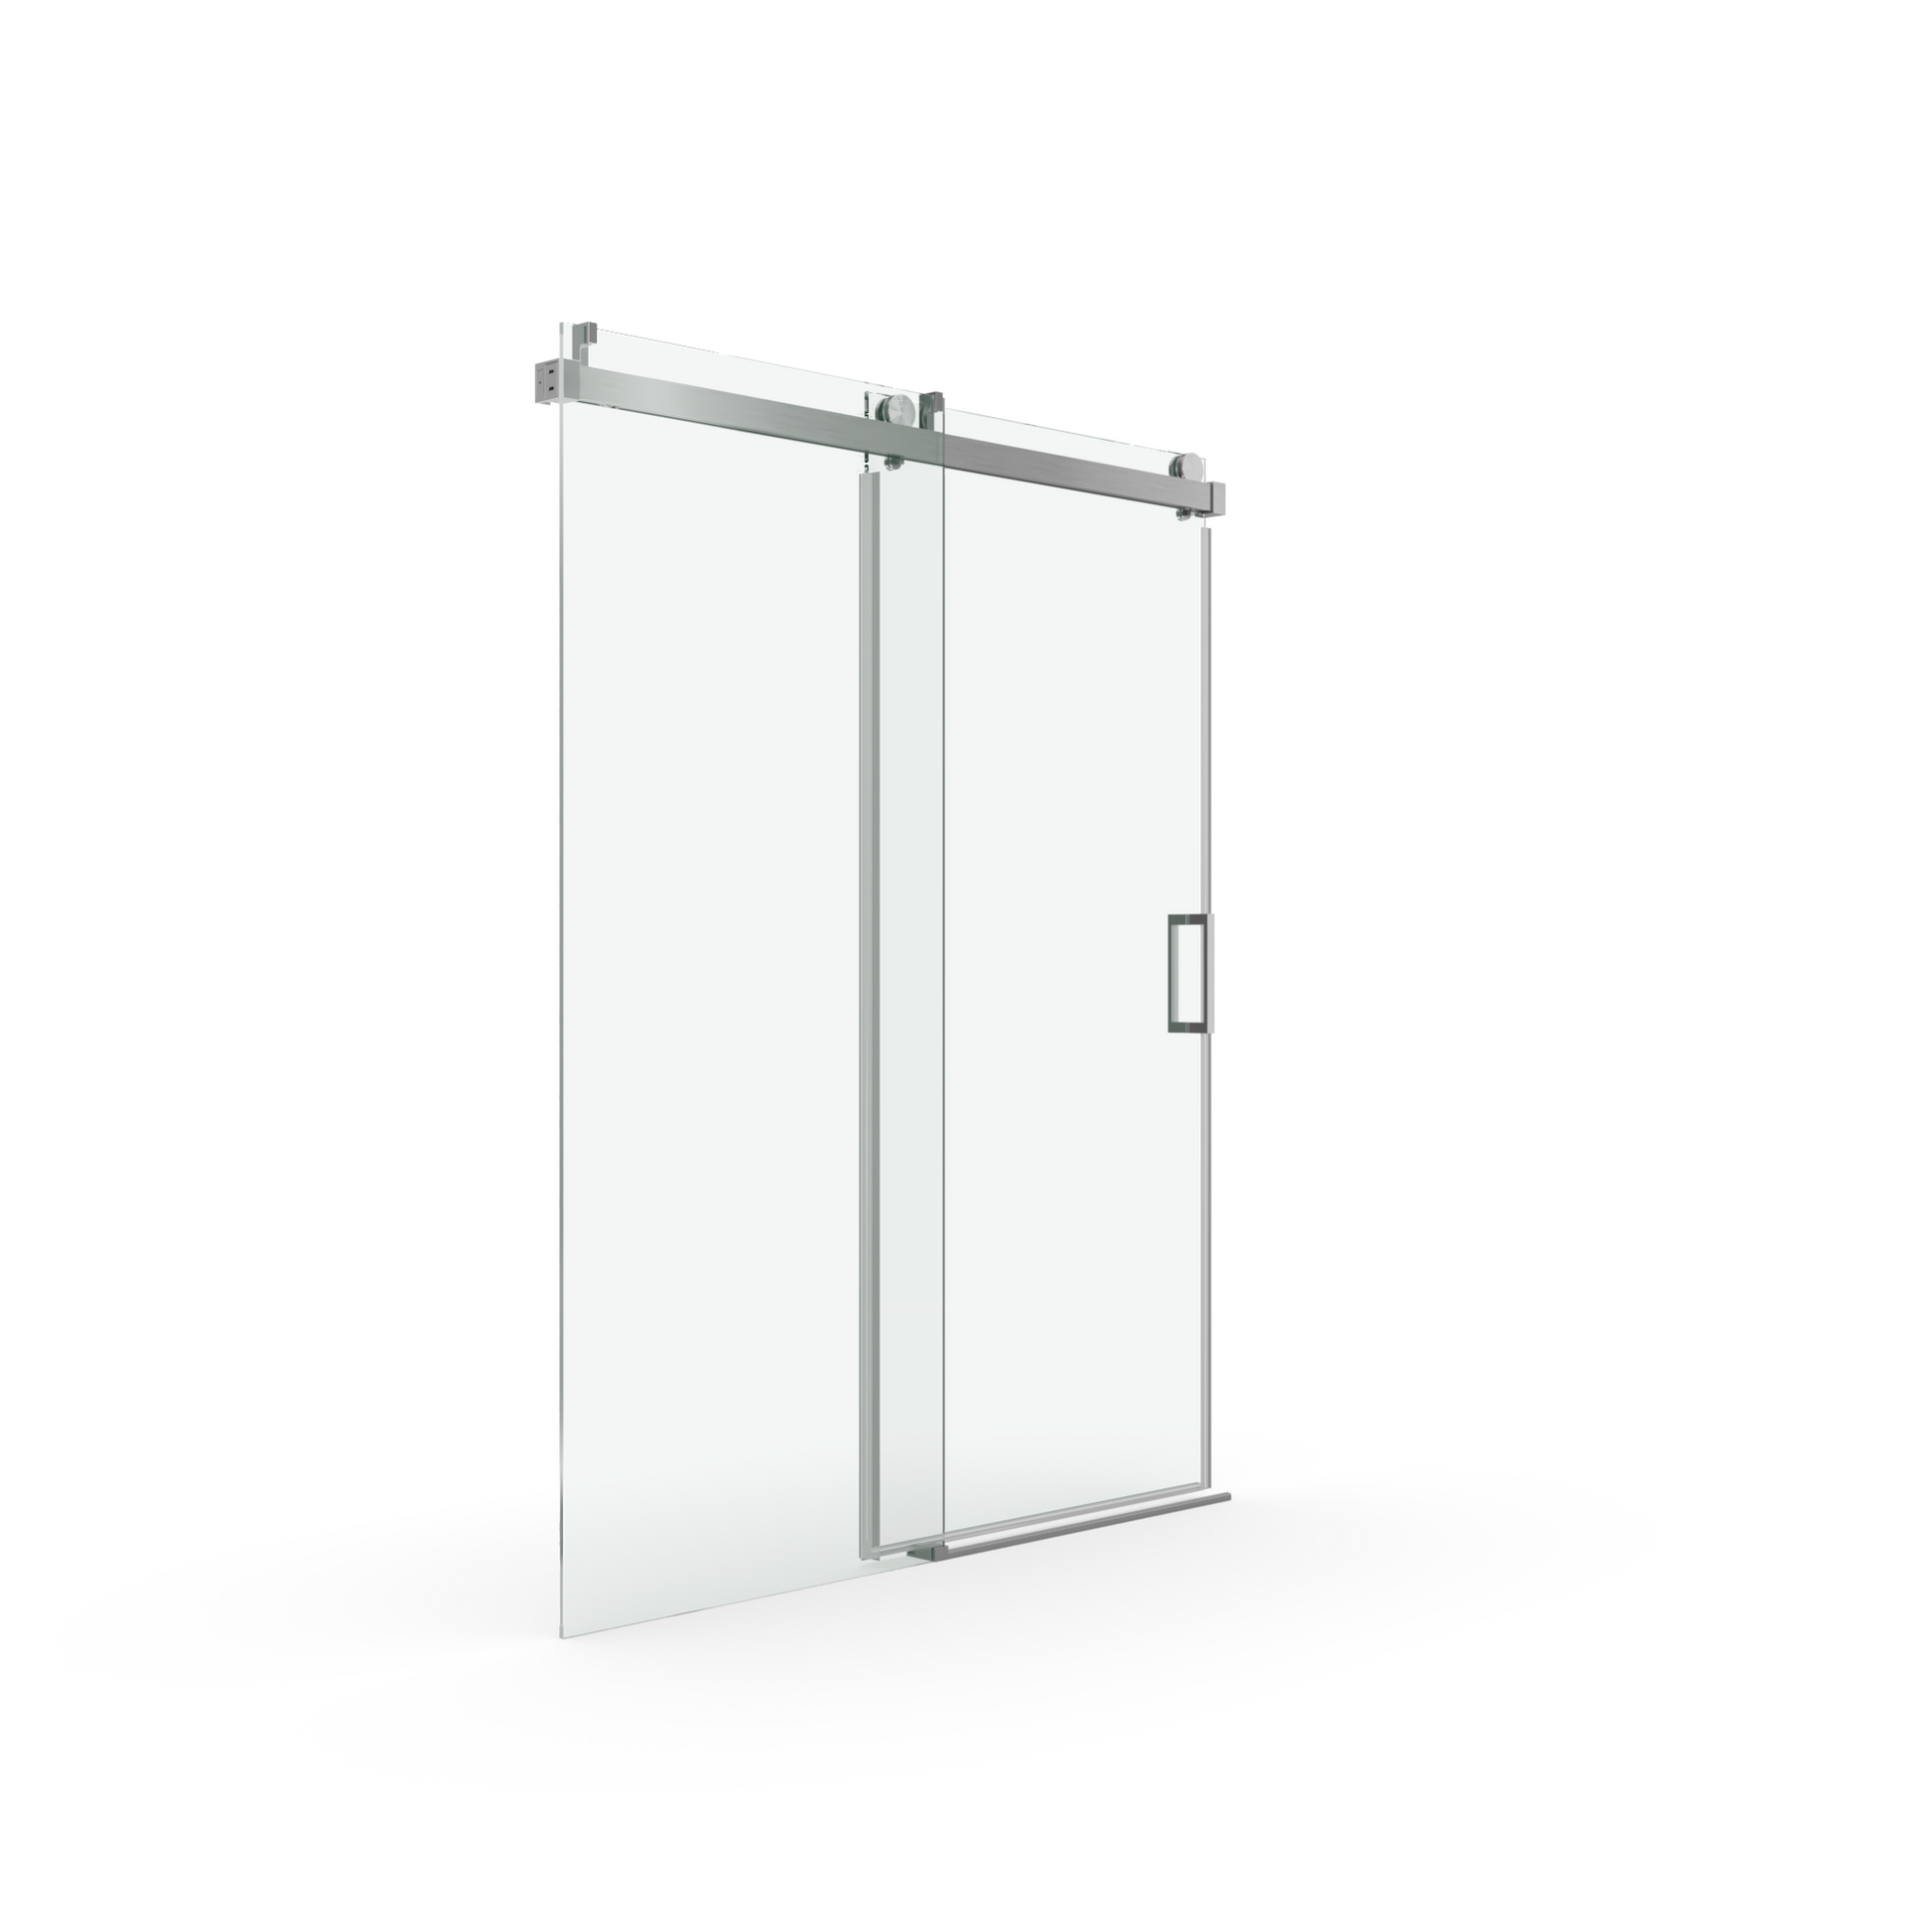 56" 60" W x 76" H Frameless Soft closing Single brushed nickel-bathroom-tempered glass